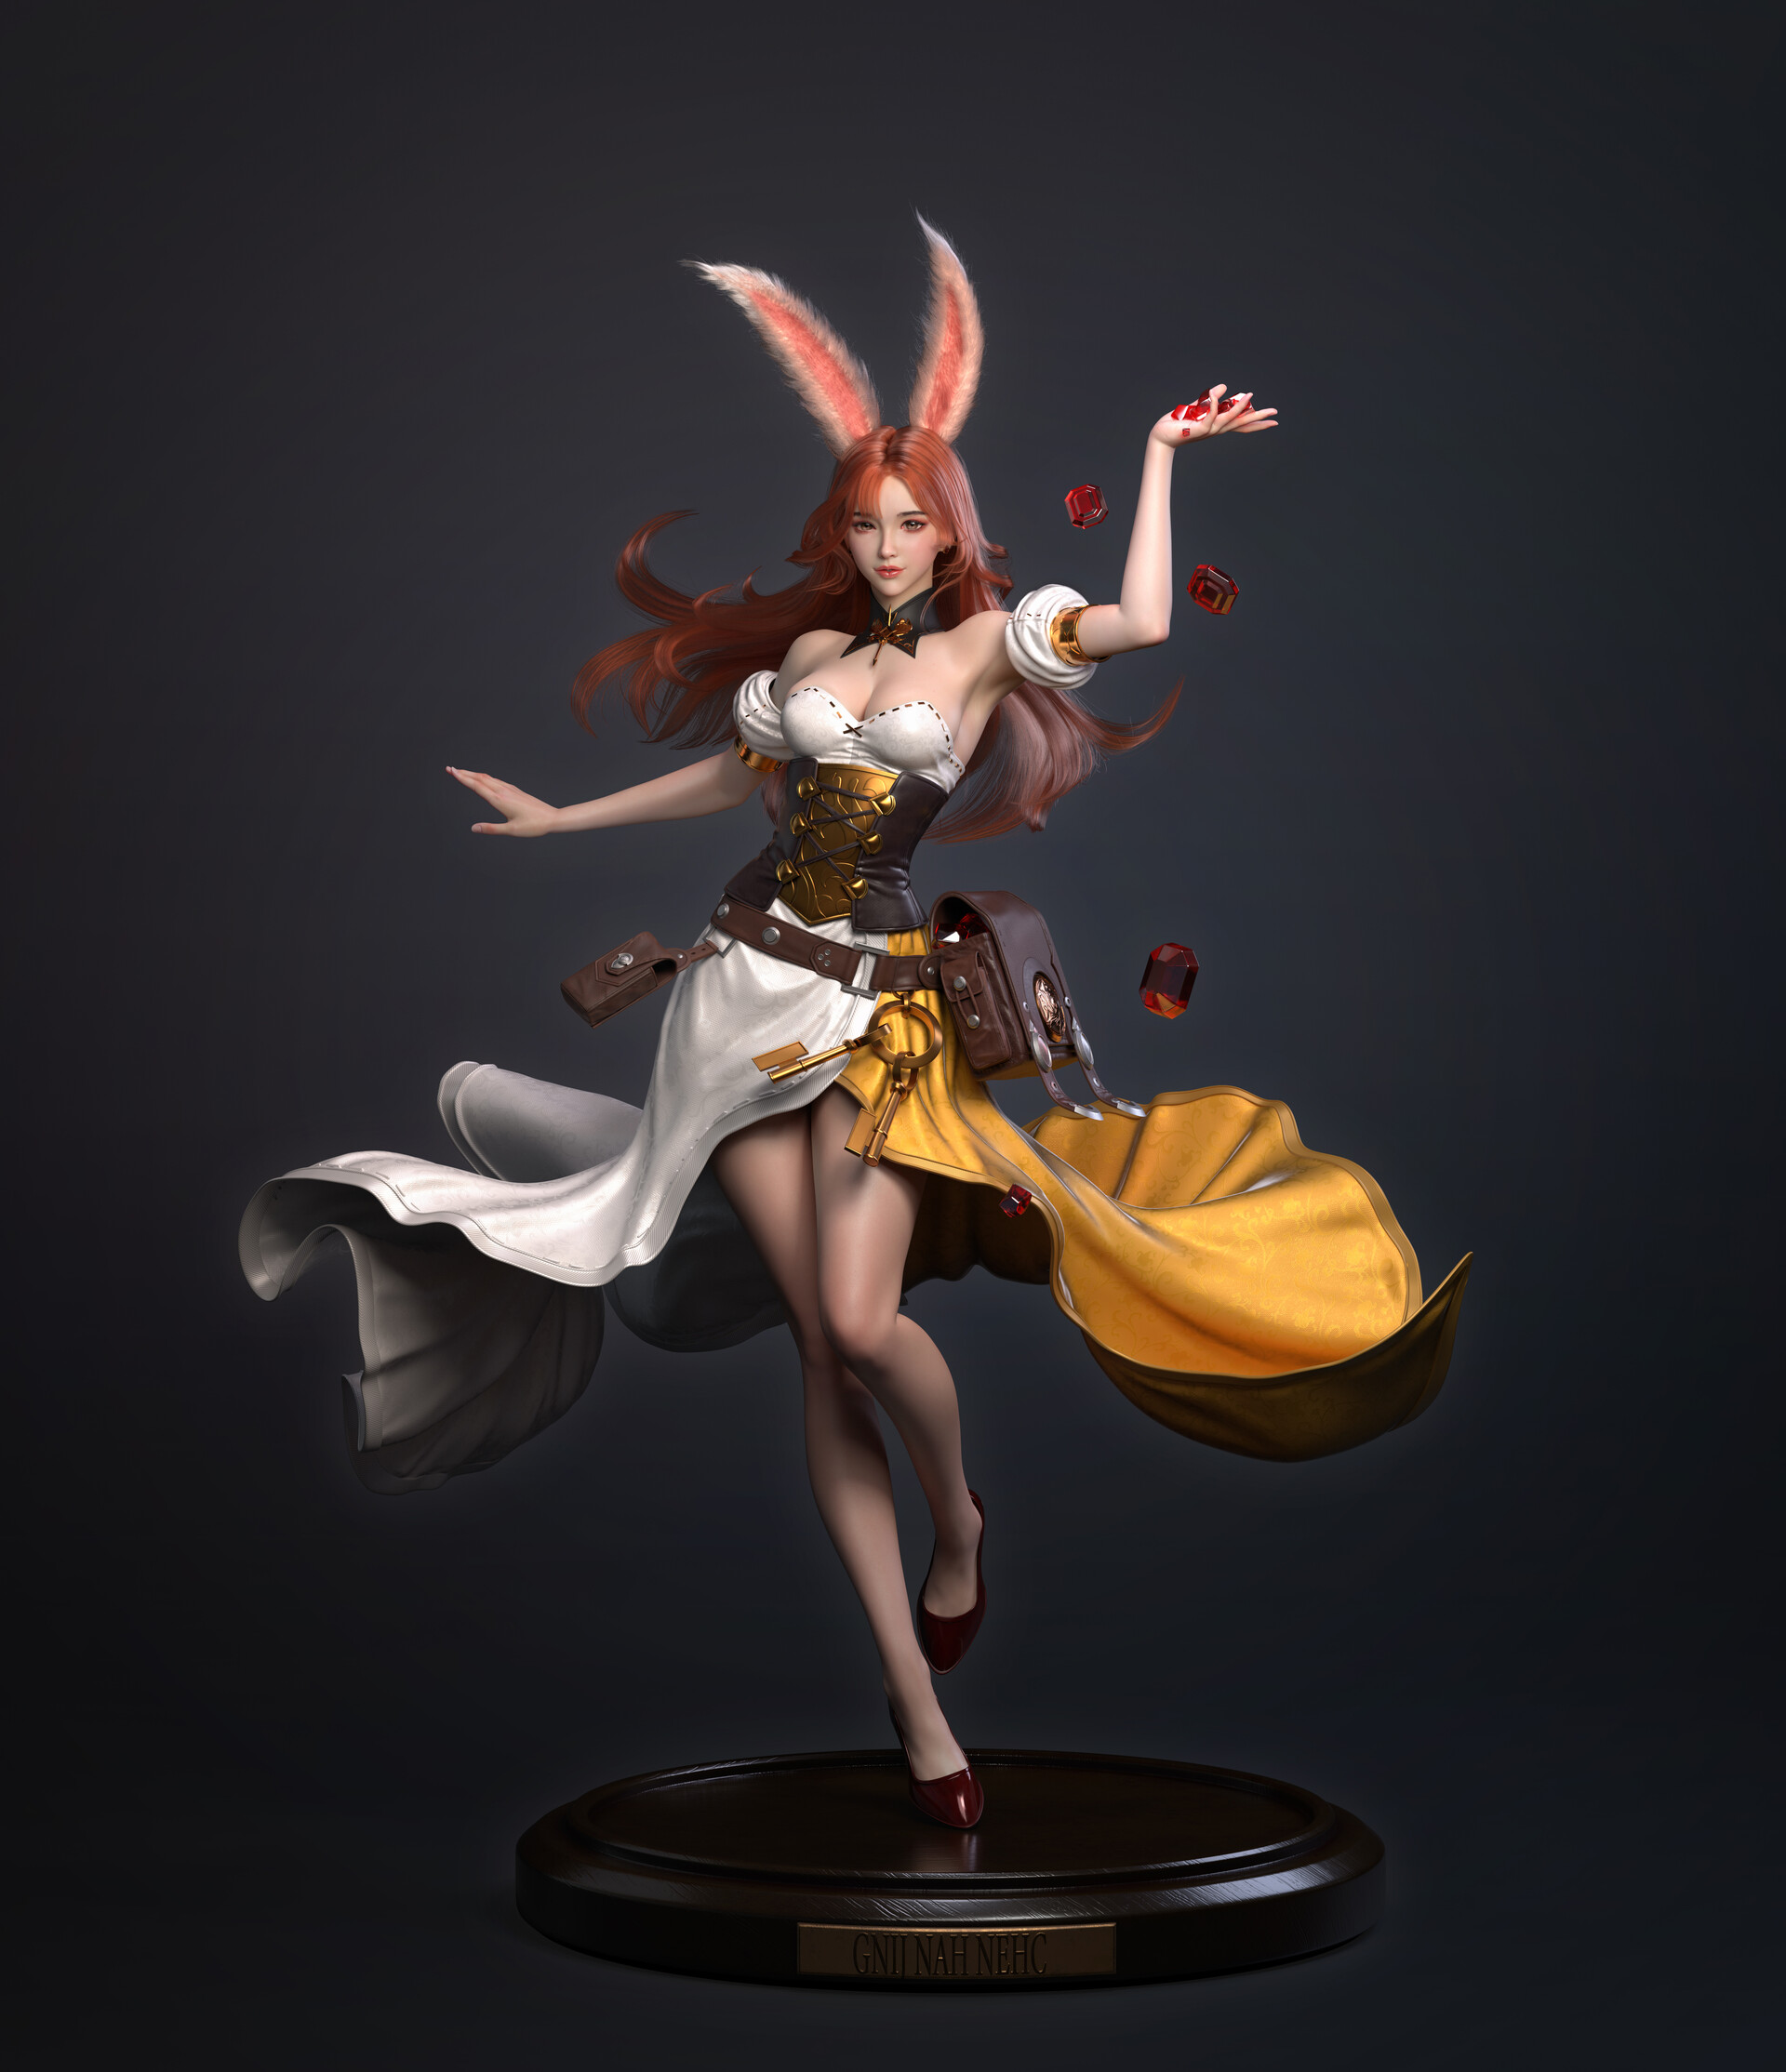 General 1920x2228 Cifangyi CGI women bunny ears dress corset redhead long hair simple background